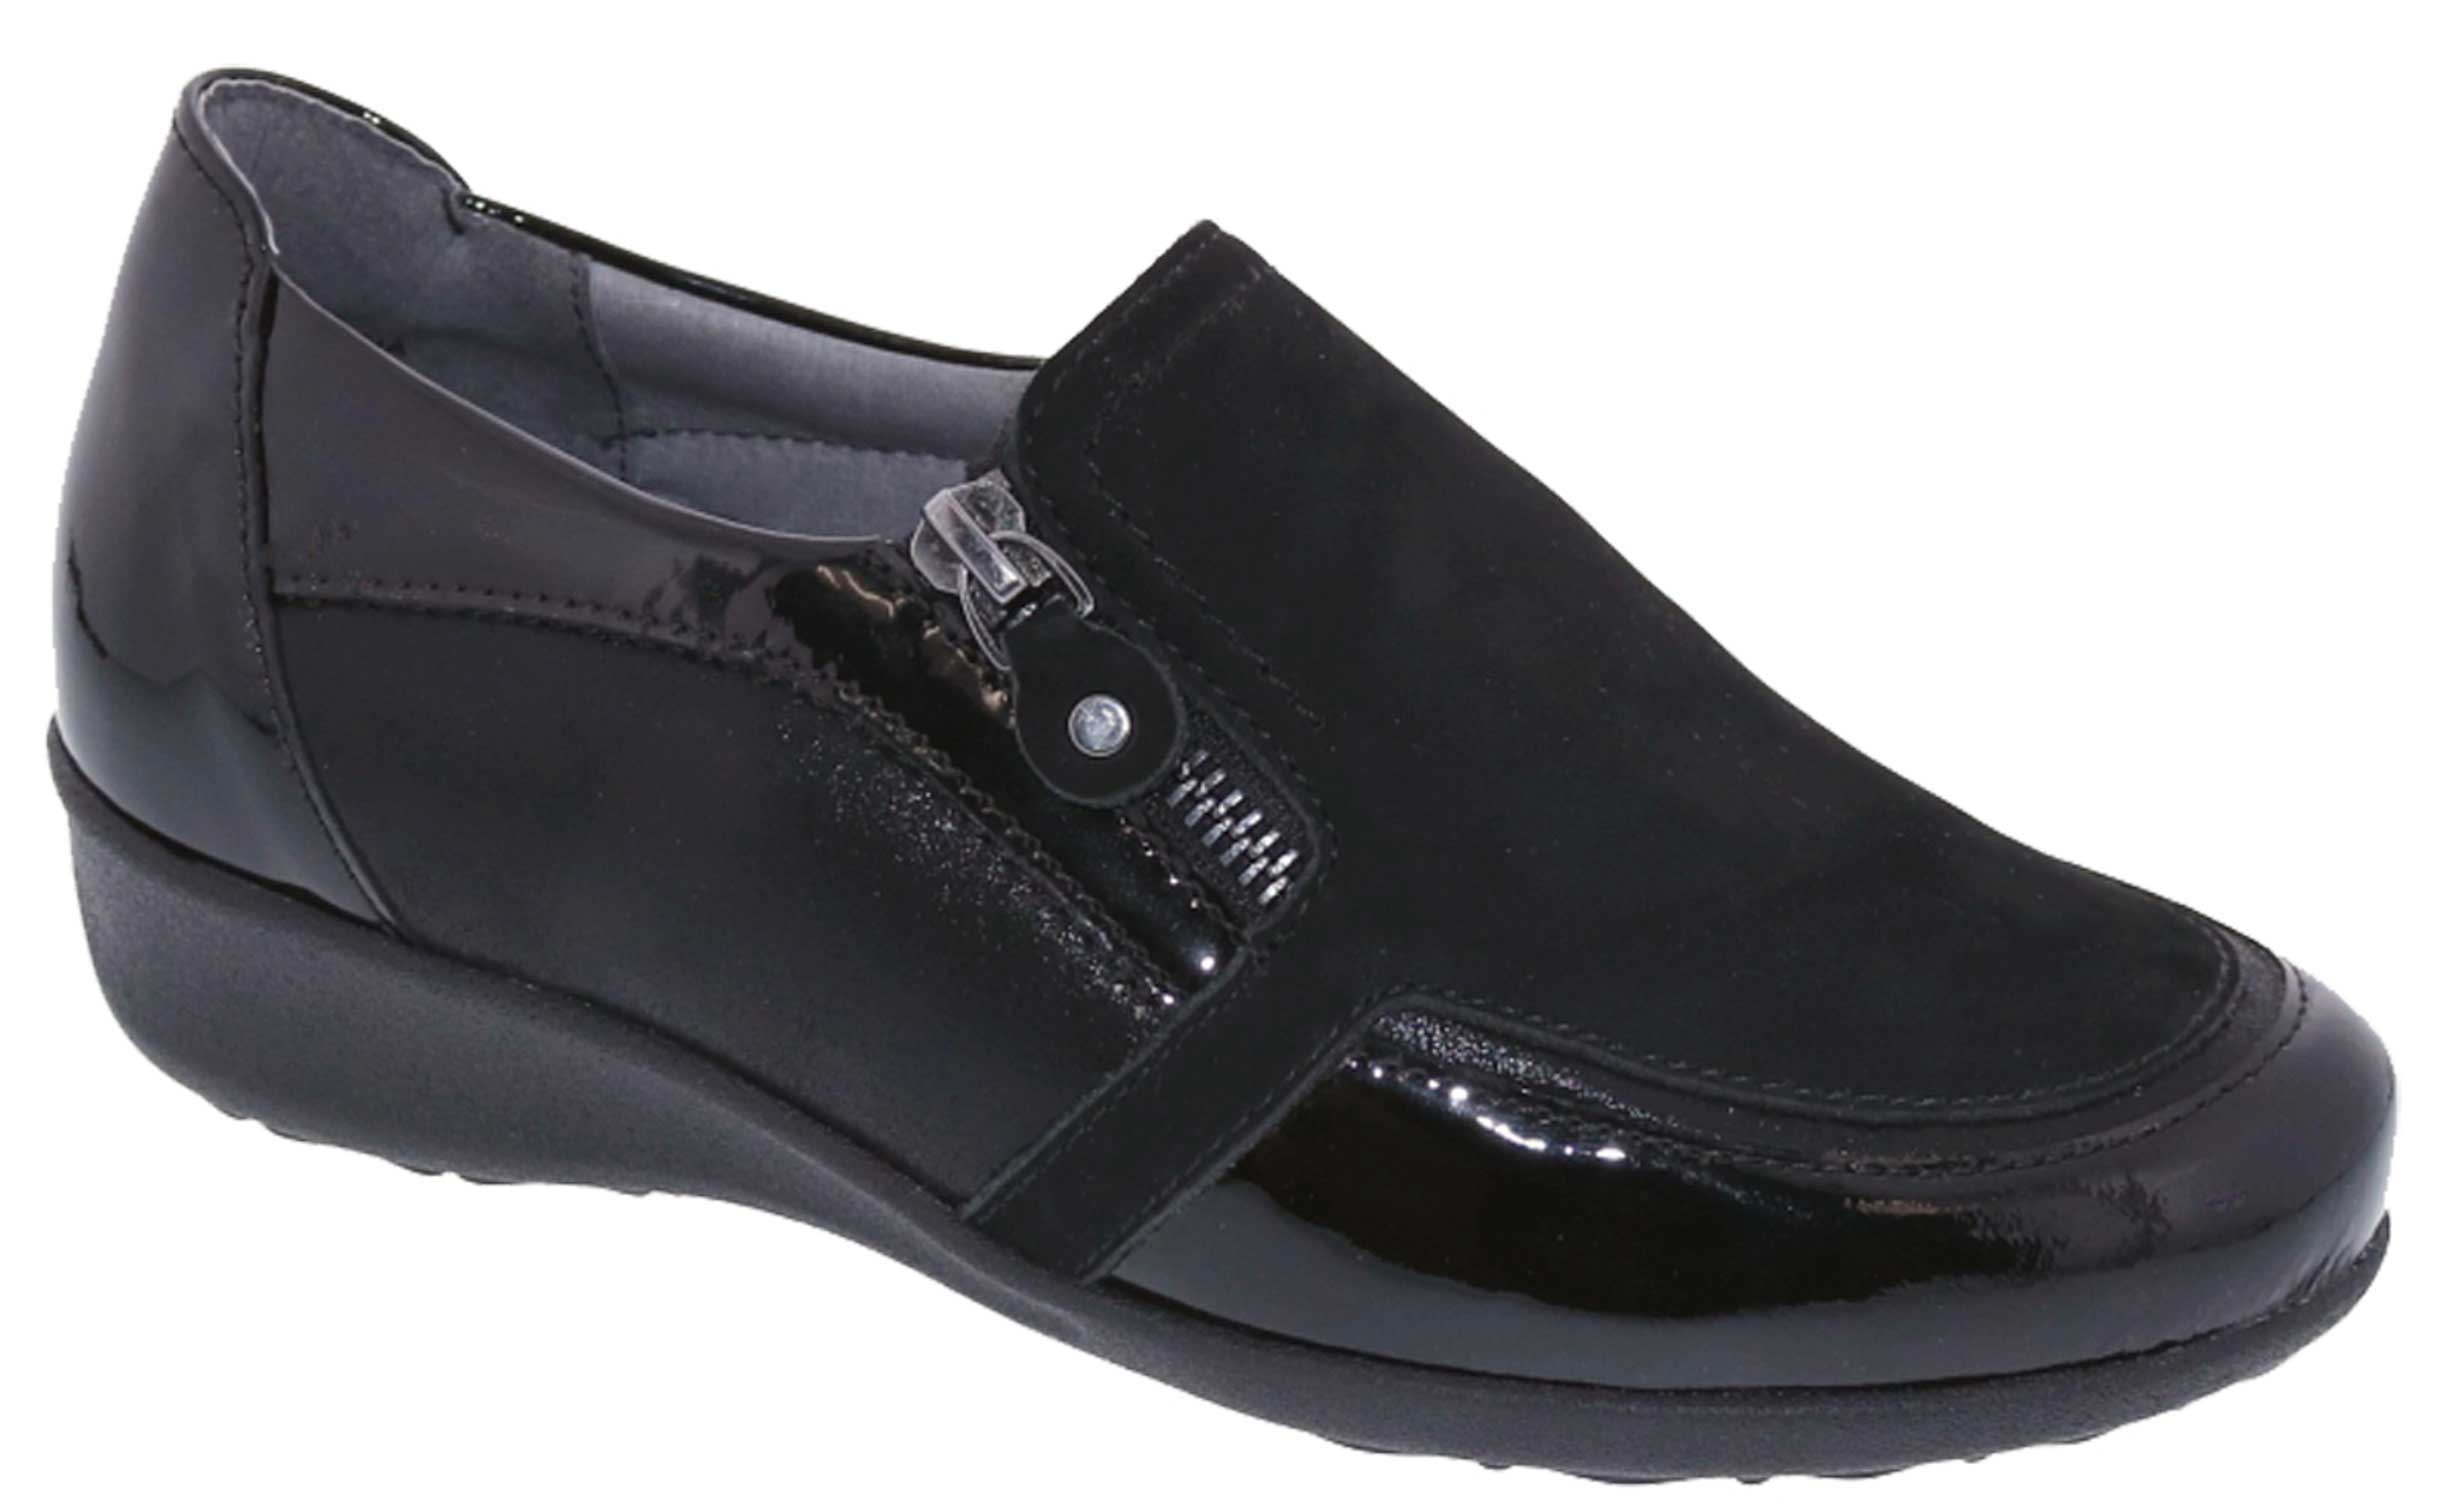 Drew Shoes Padua 13338 - Women's Casual Comfort Therapeutic Diabetic Shoe - Extra Depth For Orthotics